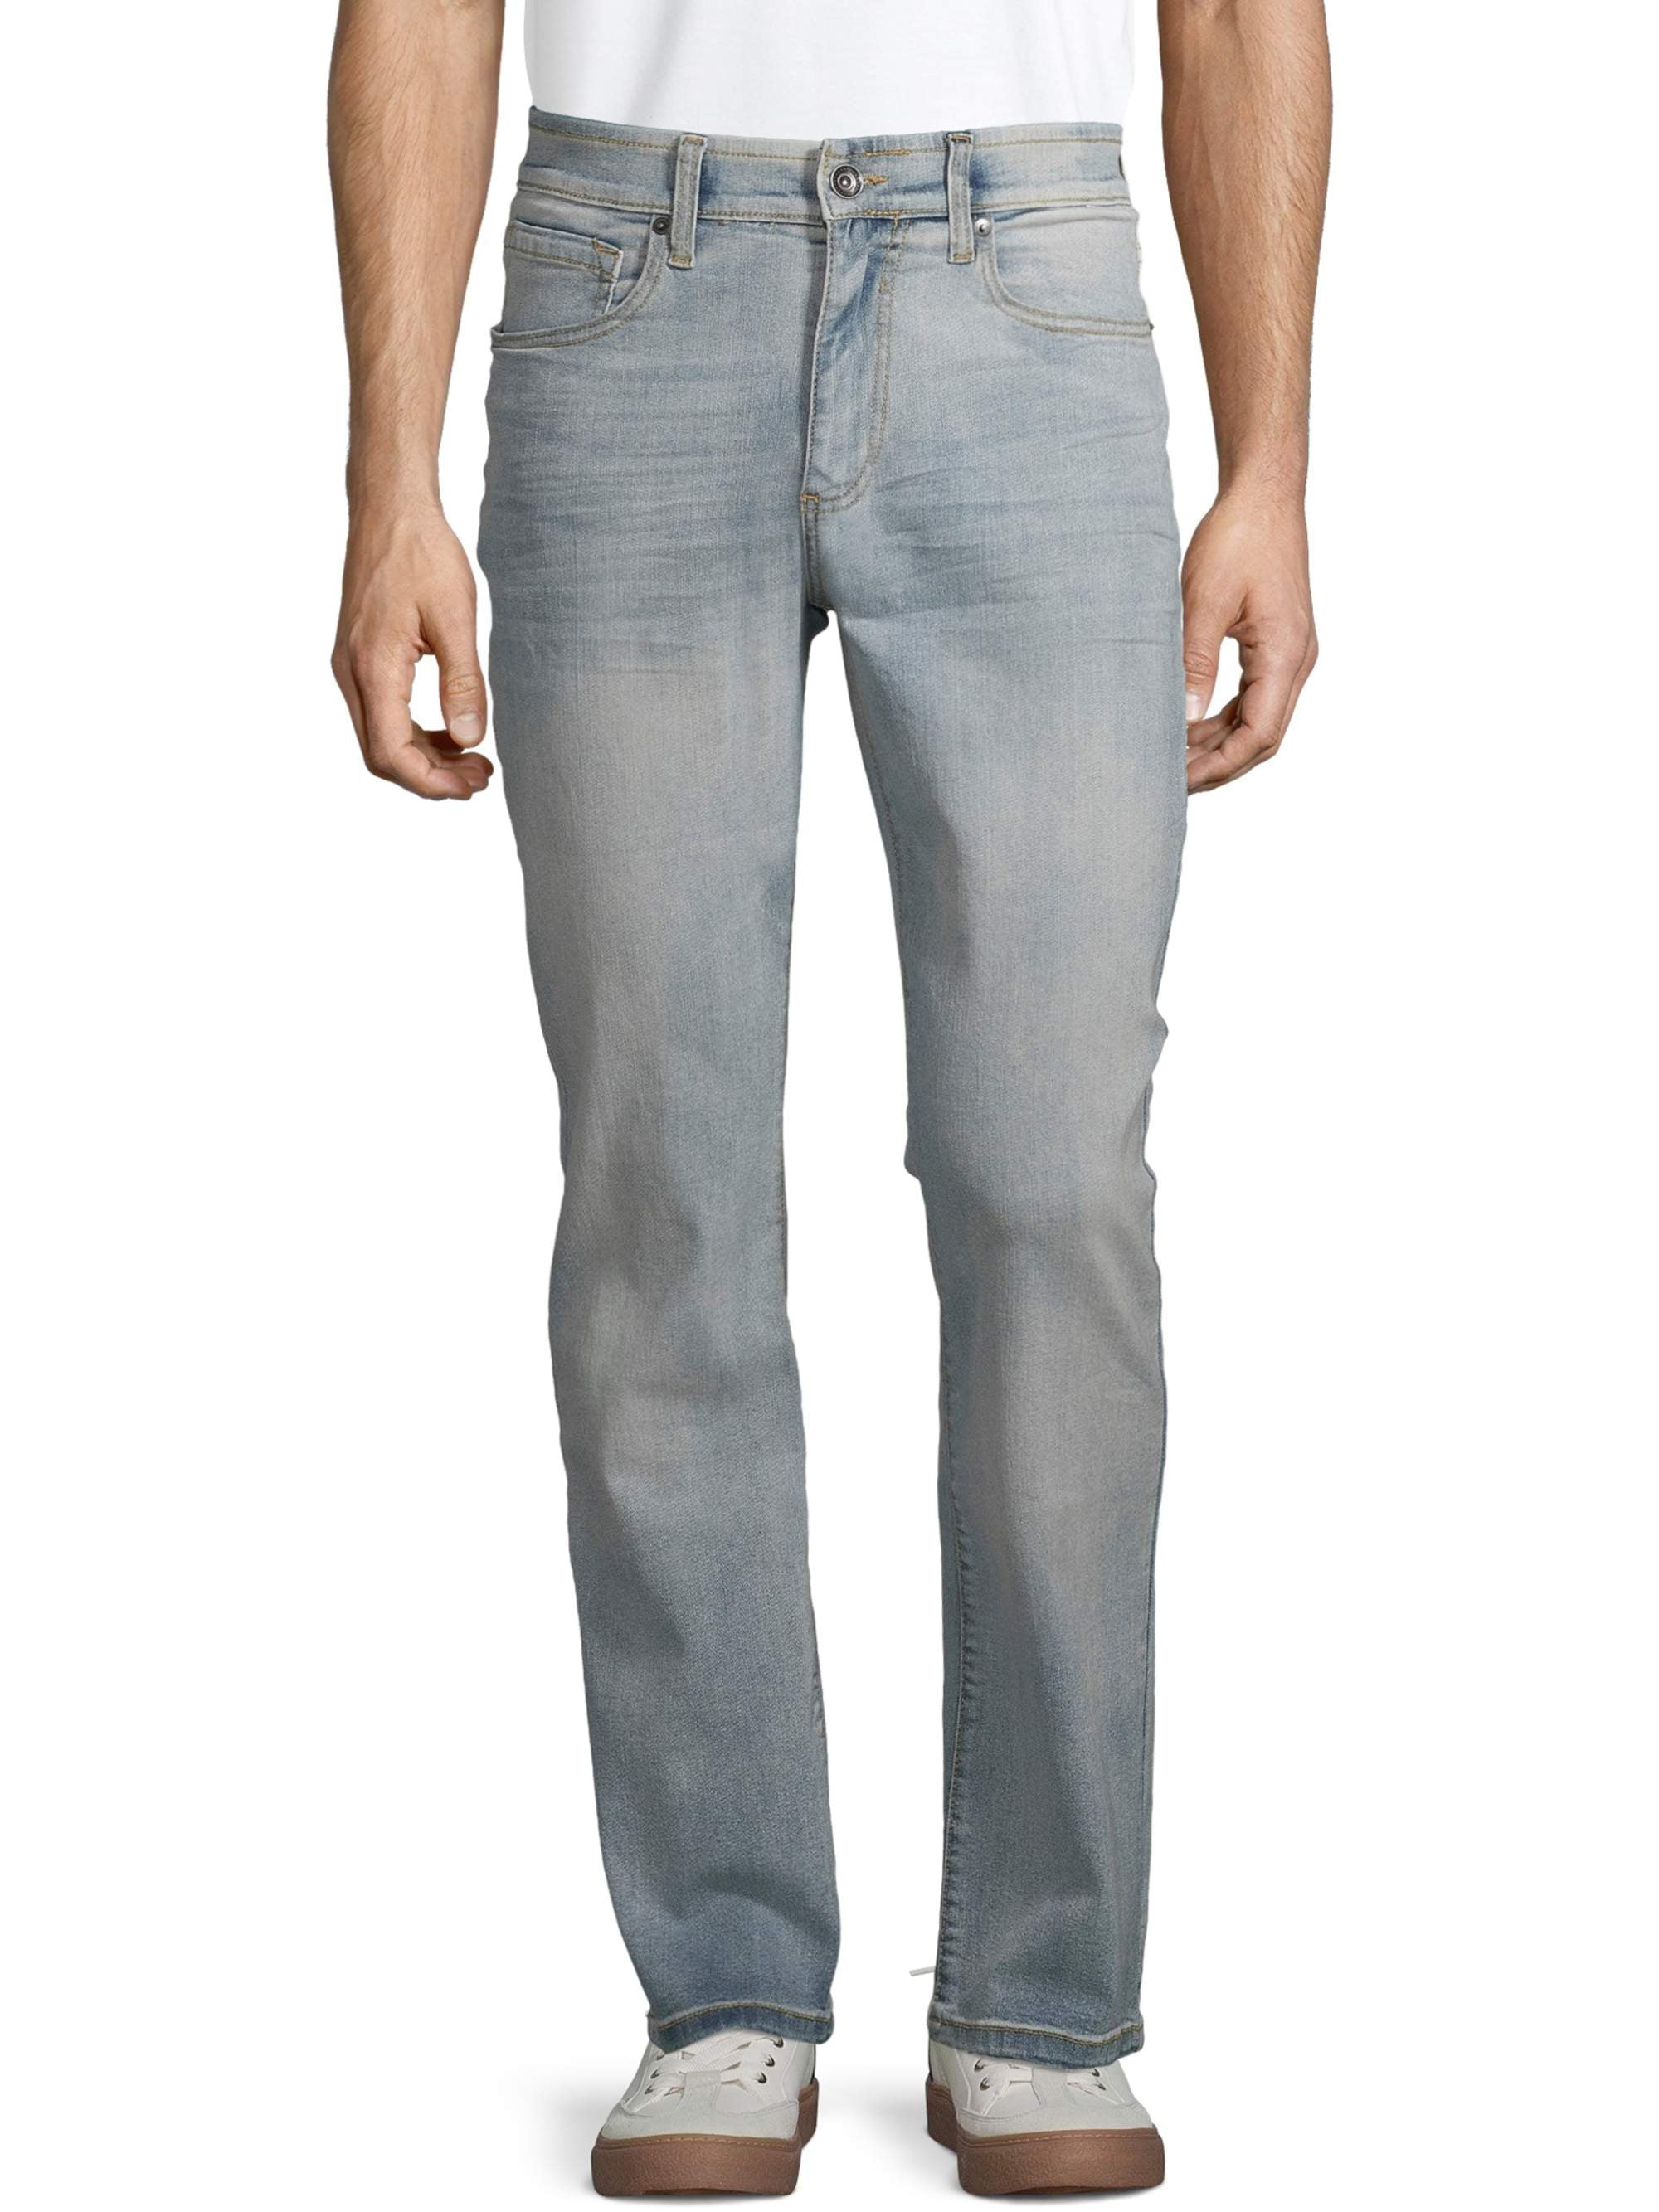 Lazer - Lazer Men's Flex Denim Bootcut Jeans - Walmart.com - Walmart.com